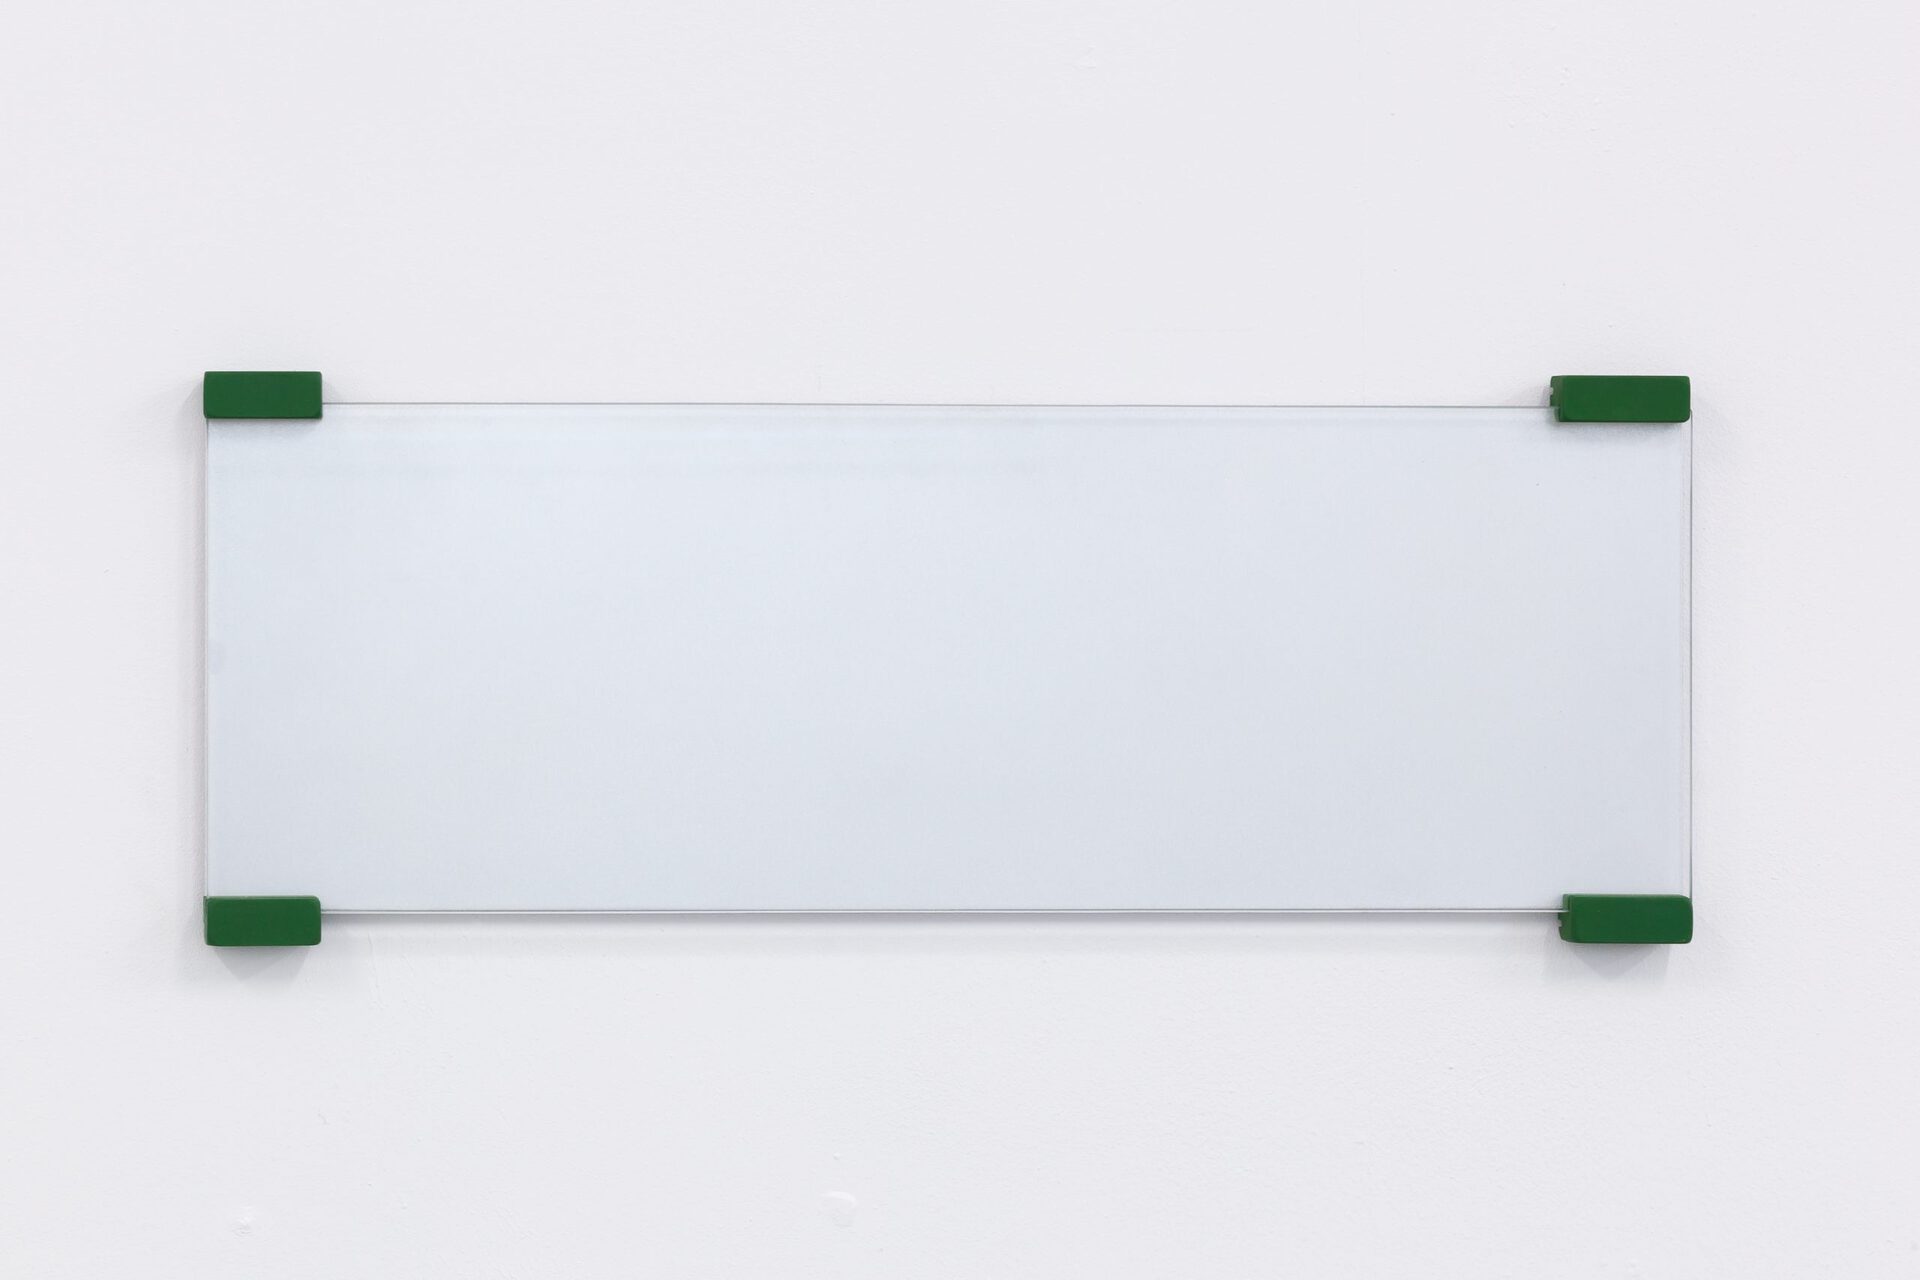 Elizabeth Orr, Viewfinder, 2021, Aluminum, wood, glass, 20.3 x 53.3 cm, 8 x 21 in